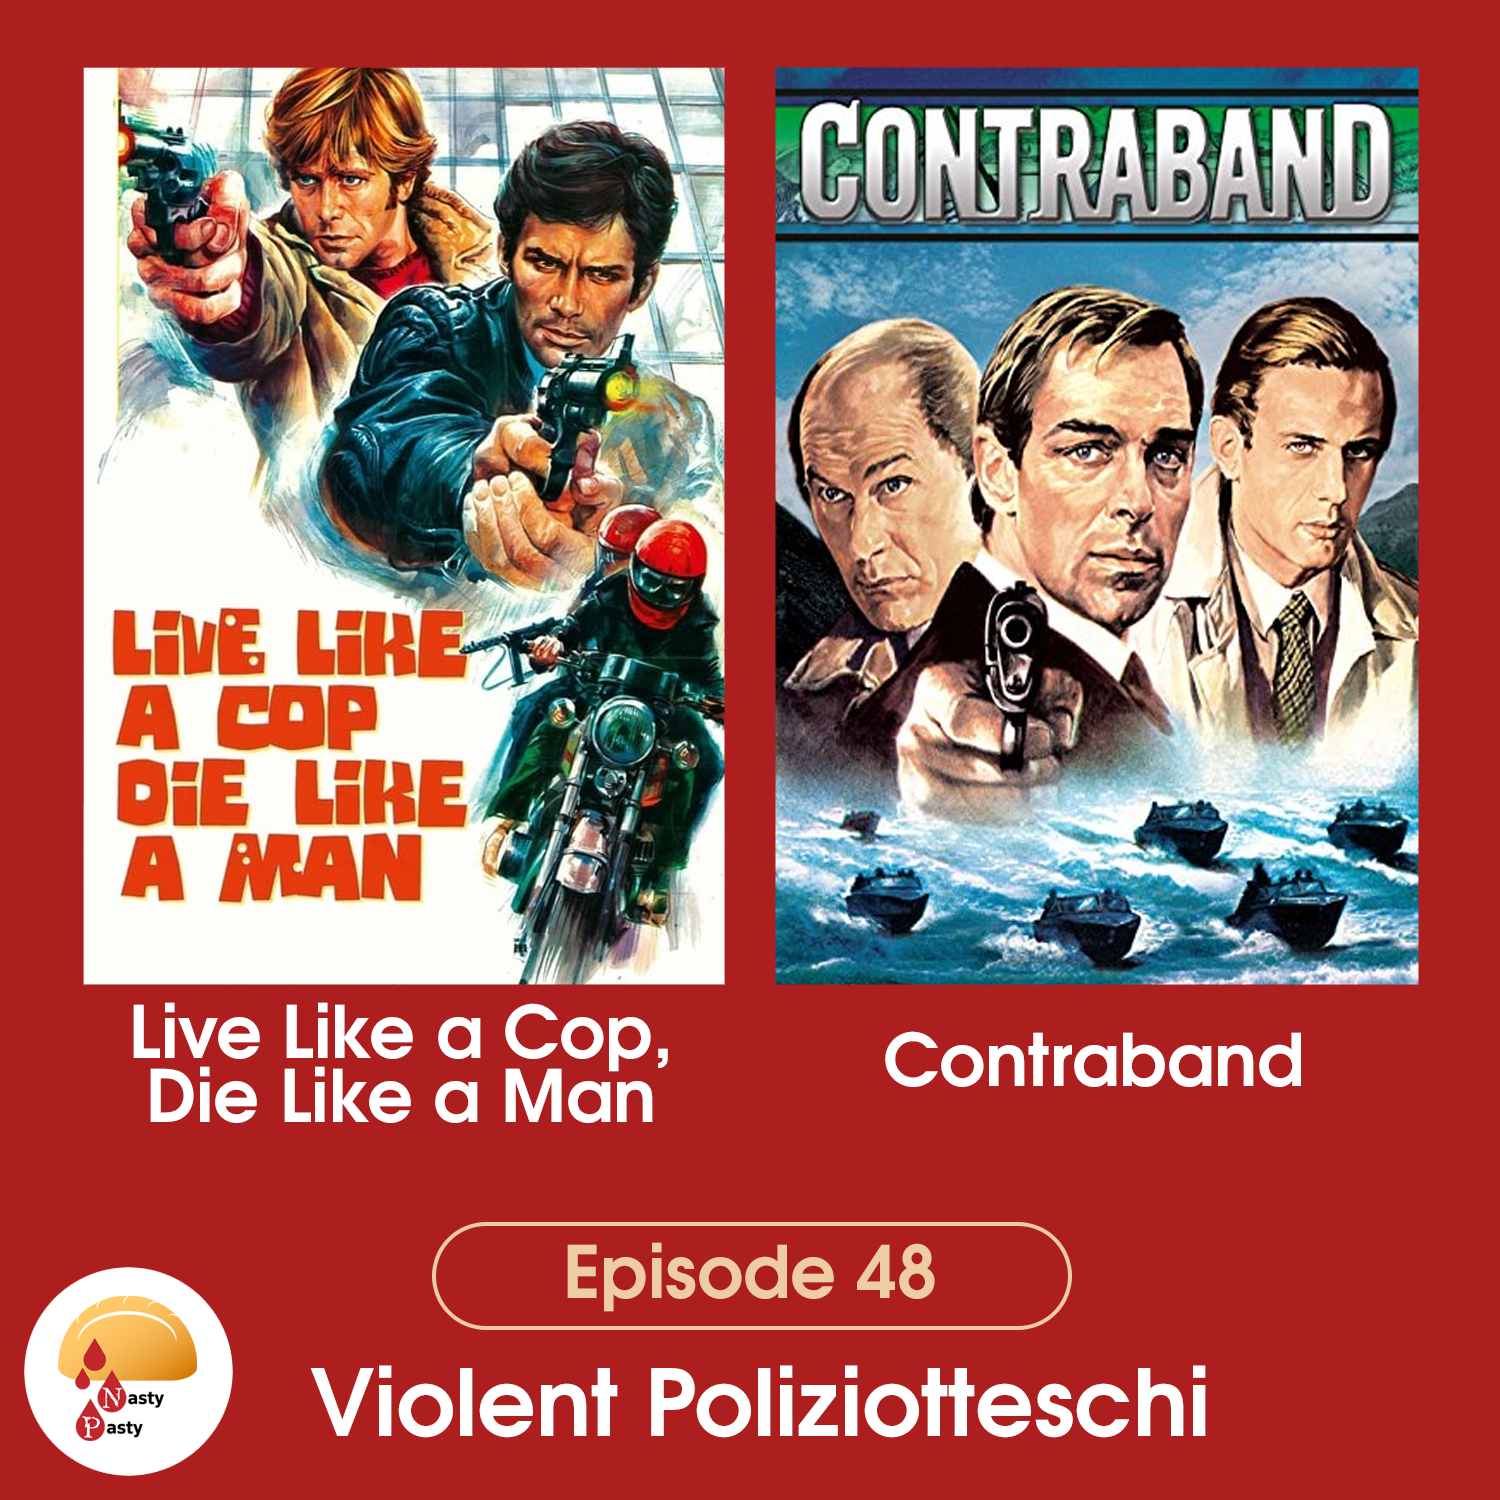 Episode 48: Violent Poliziotteschi